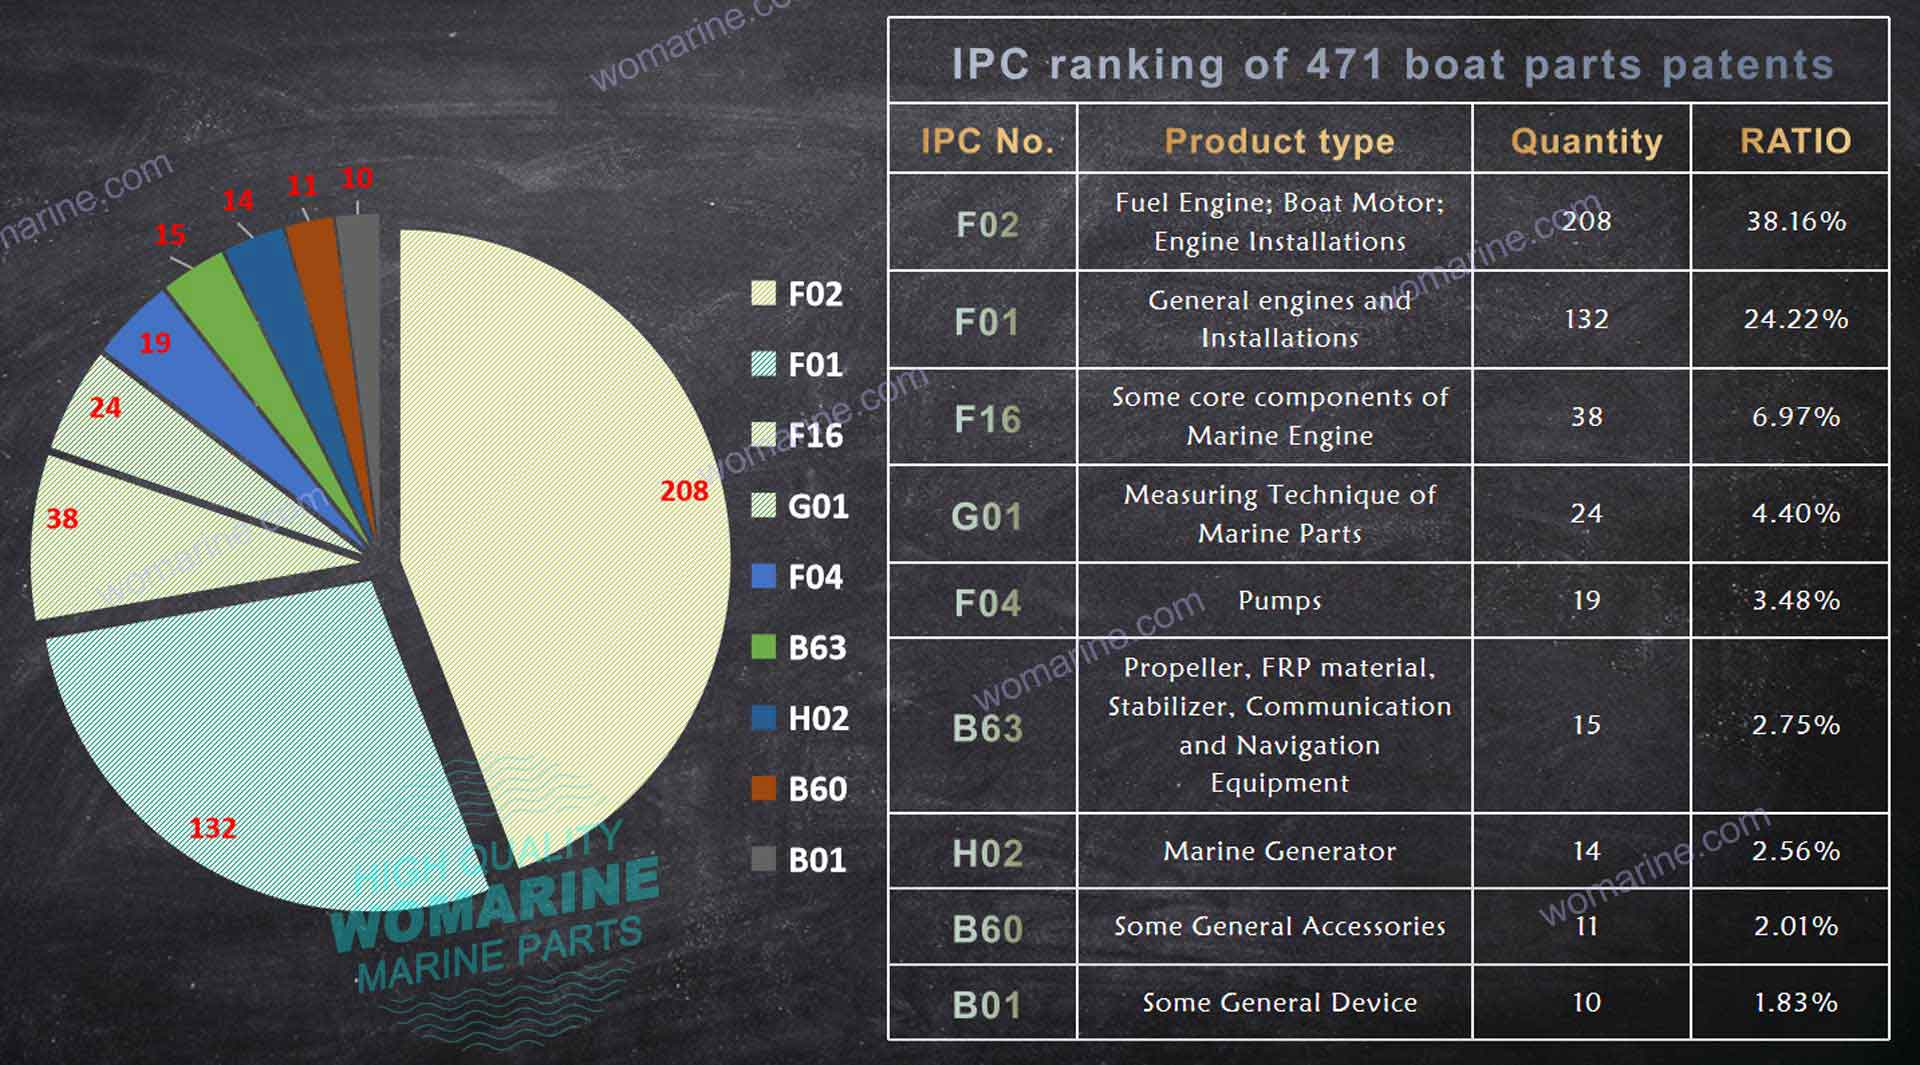 WOMARINE: IPC ranking of 471 boat parts patents